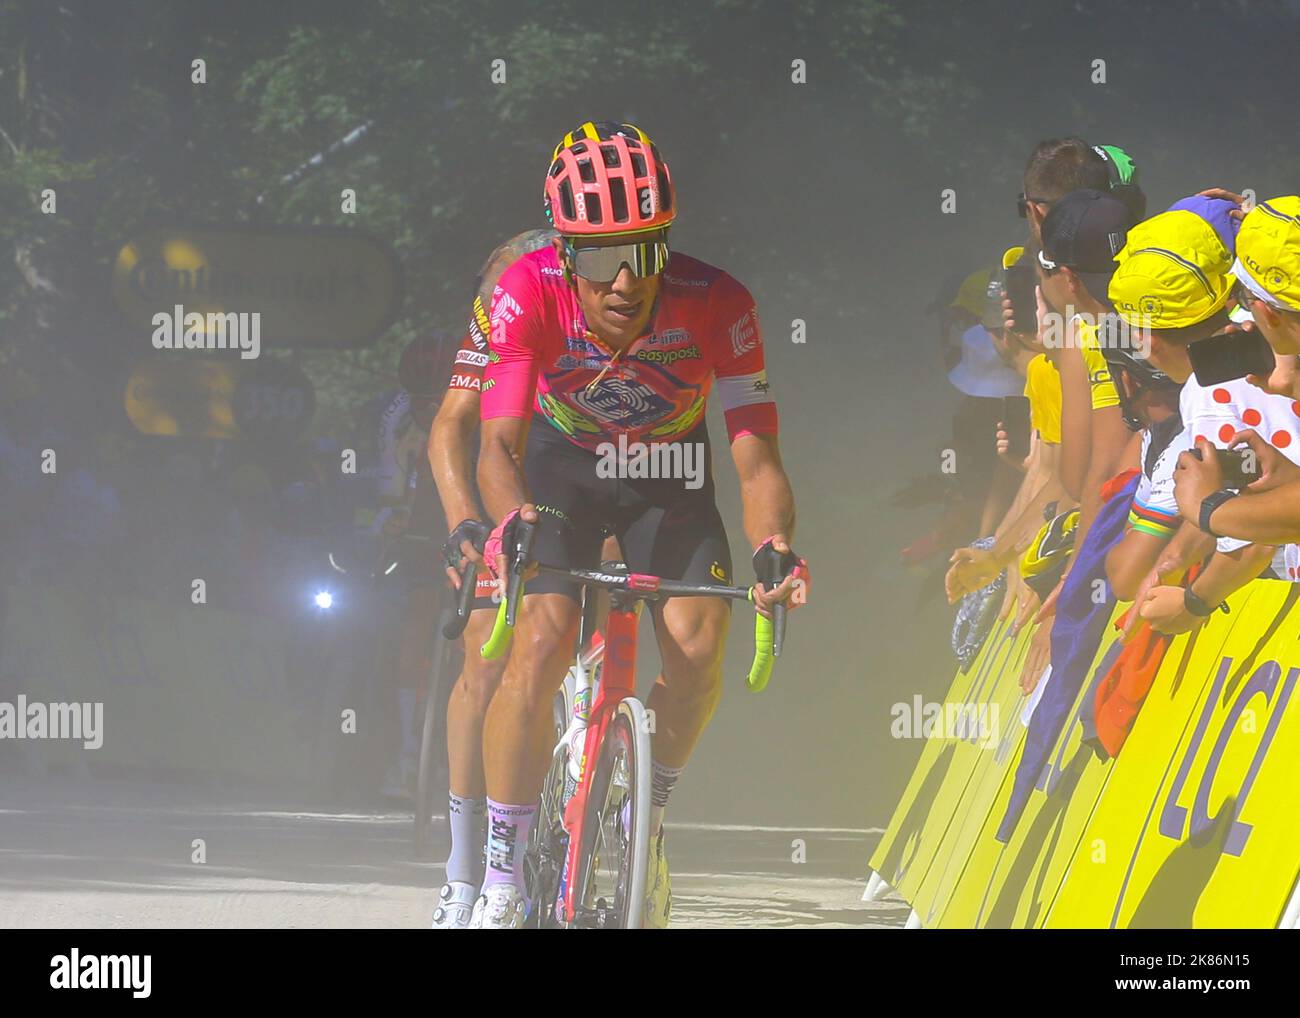 Rigoberto URÃN during Tour De France, Stage 7, France, 8th July 2022, Credit:Chris Wallis/Goding Images/PA Images Stock Photo